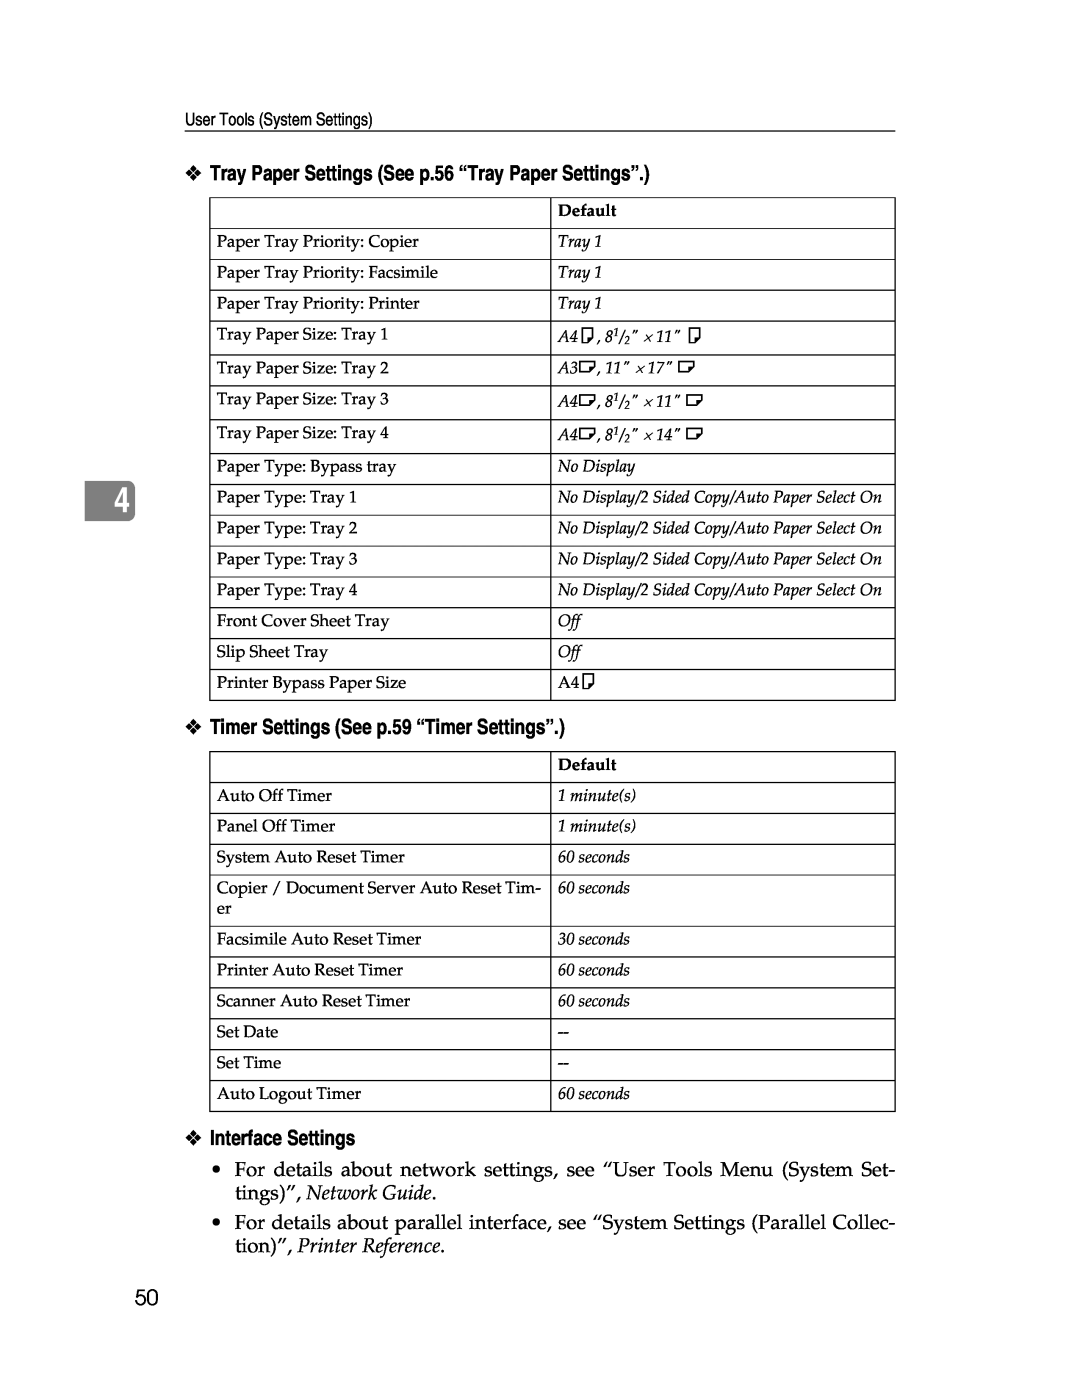 Lanier LD225, LD230 manual Tray Paper Settings See p.56 “Tray Paper Settings”, Timer Settings See p.59 “Timer Settings” 